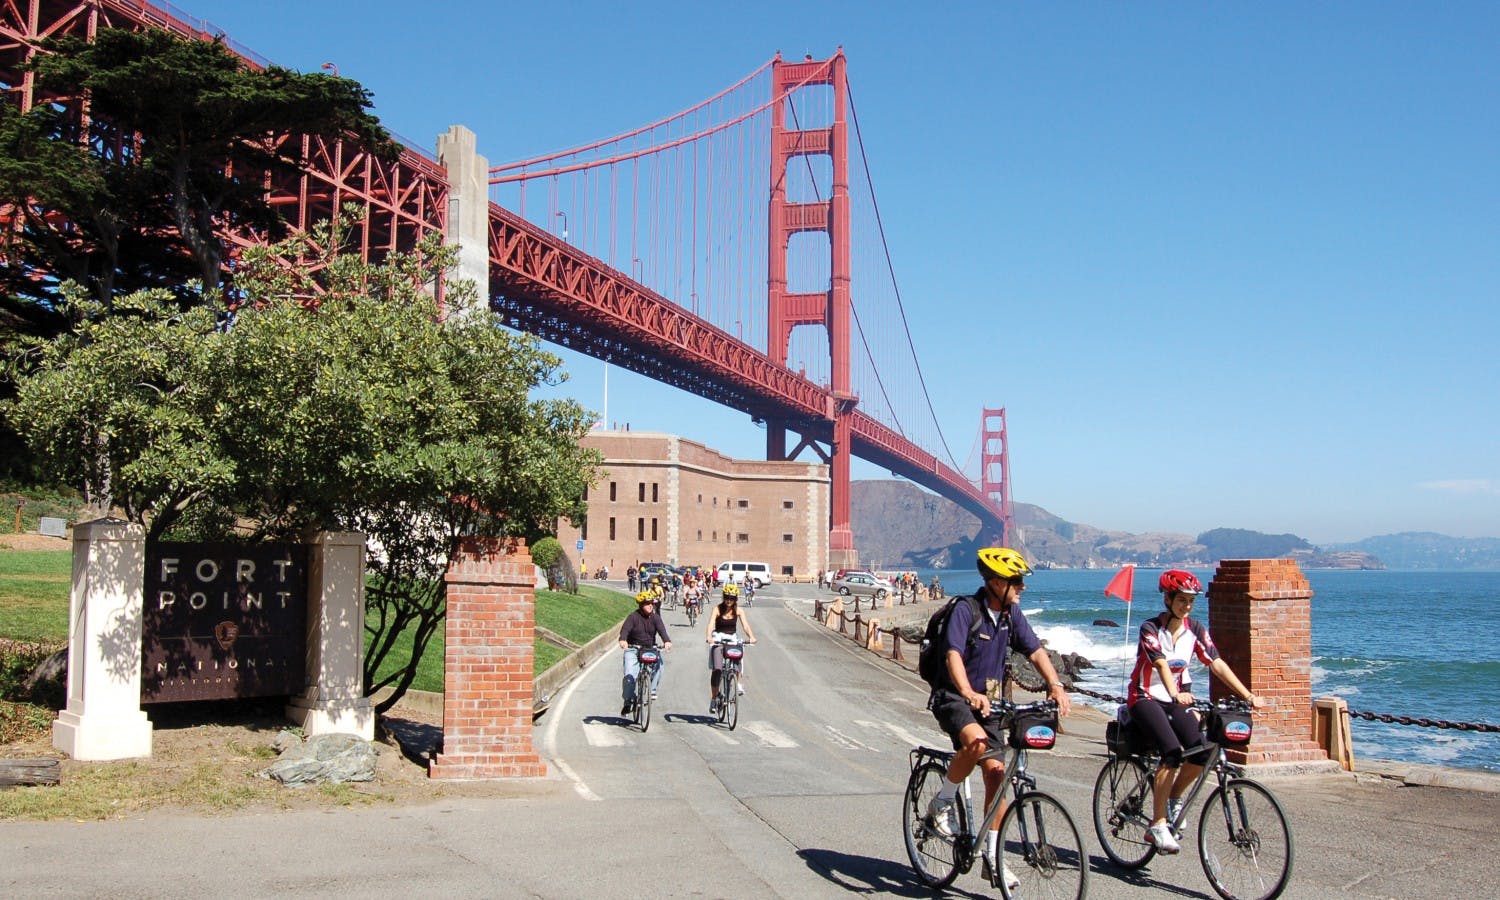 Golden Gate Bridge guided tour by bike